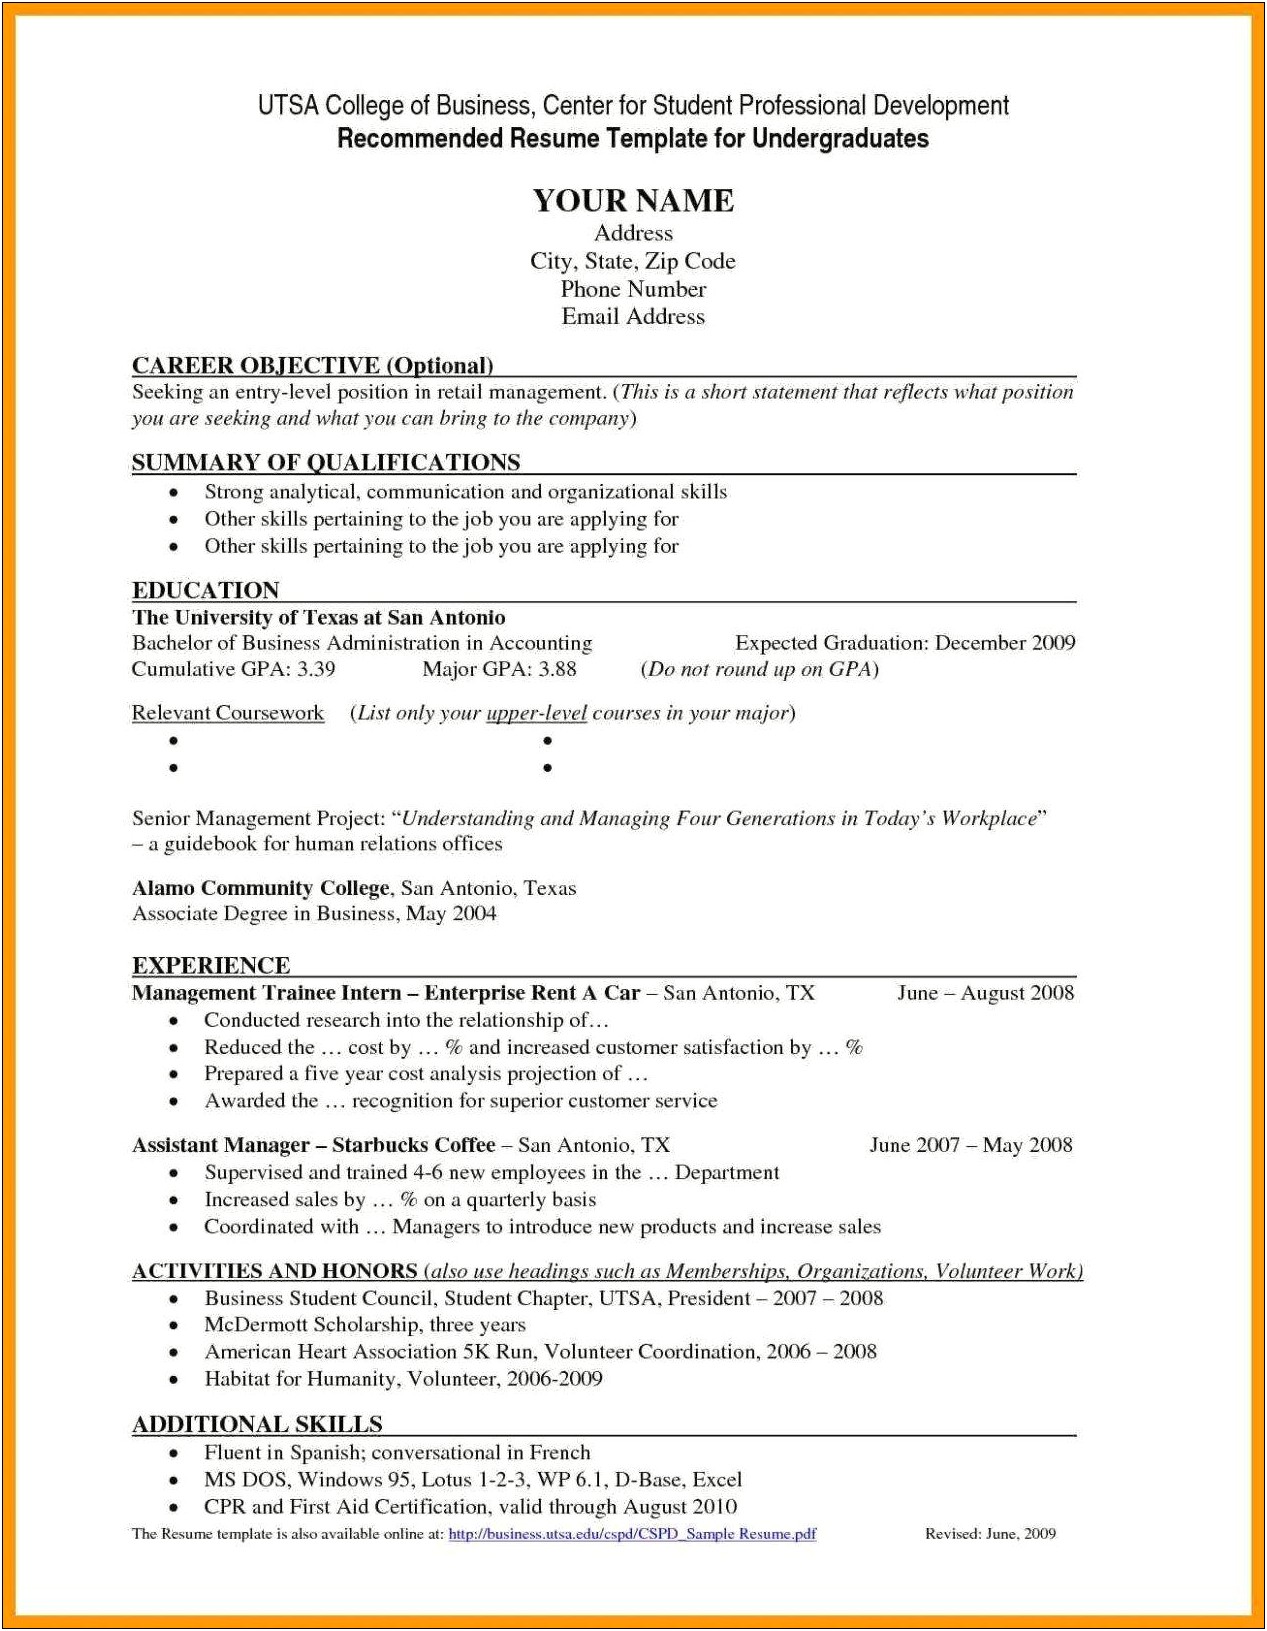 Enterprise Job Description For Resume